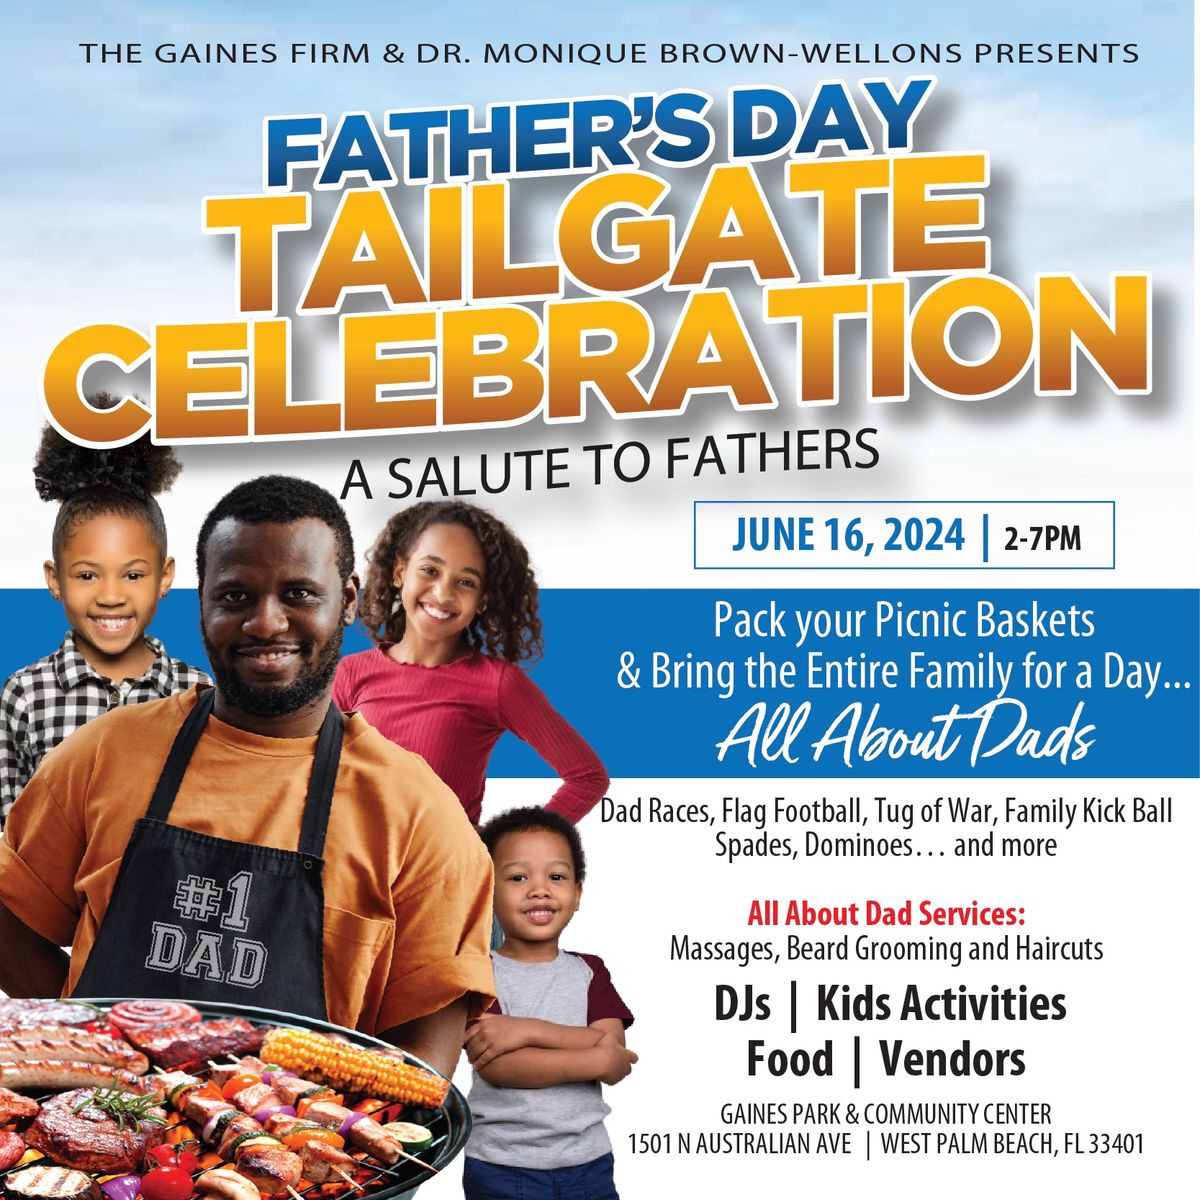 Fathers Day Tailgate Celebration \u201cA Salute To Fathers\u201d